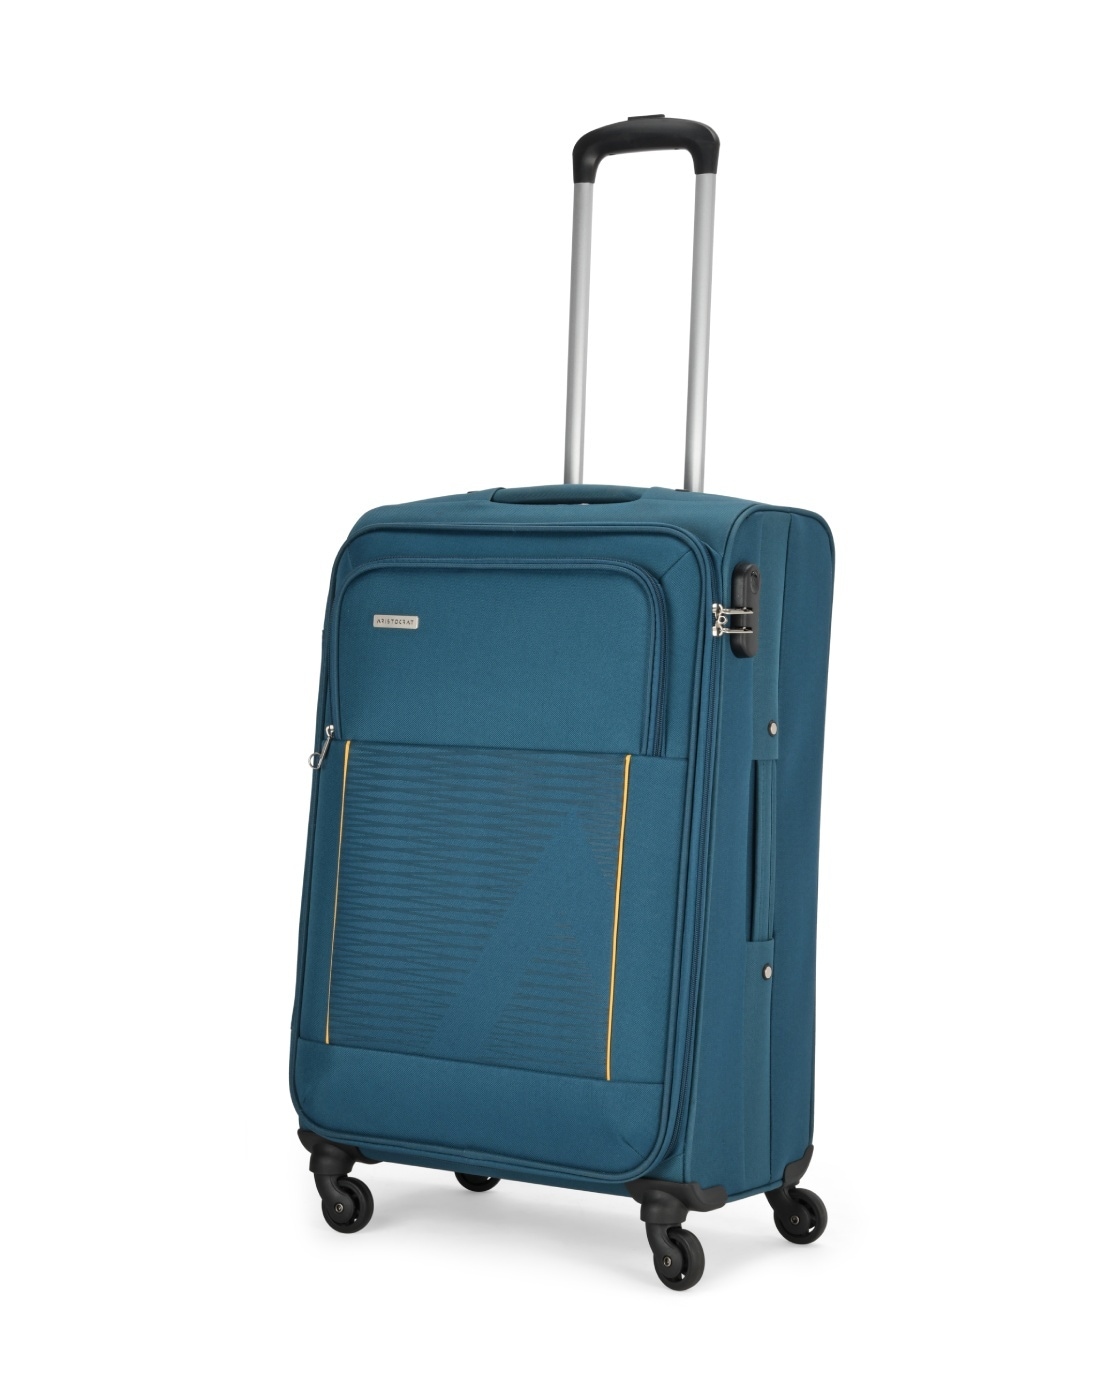 VIP Aristocrat Suicase Set| Number Lock, Antitheft Zip, 8Wheel|  Small+Medium+Large Check-in Suitcase 8 Wheels - 28 inch Teal Blue - Price  in India | Flipkart.com